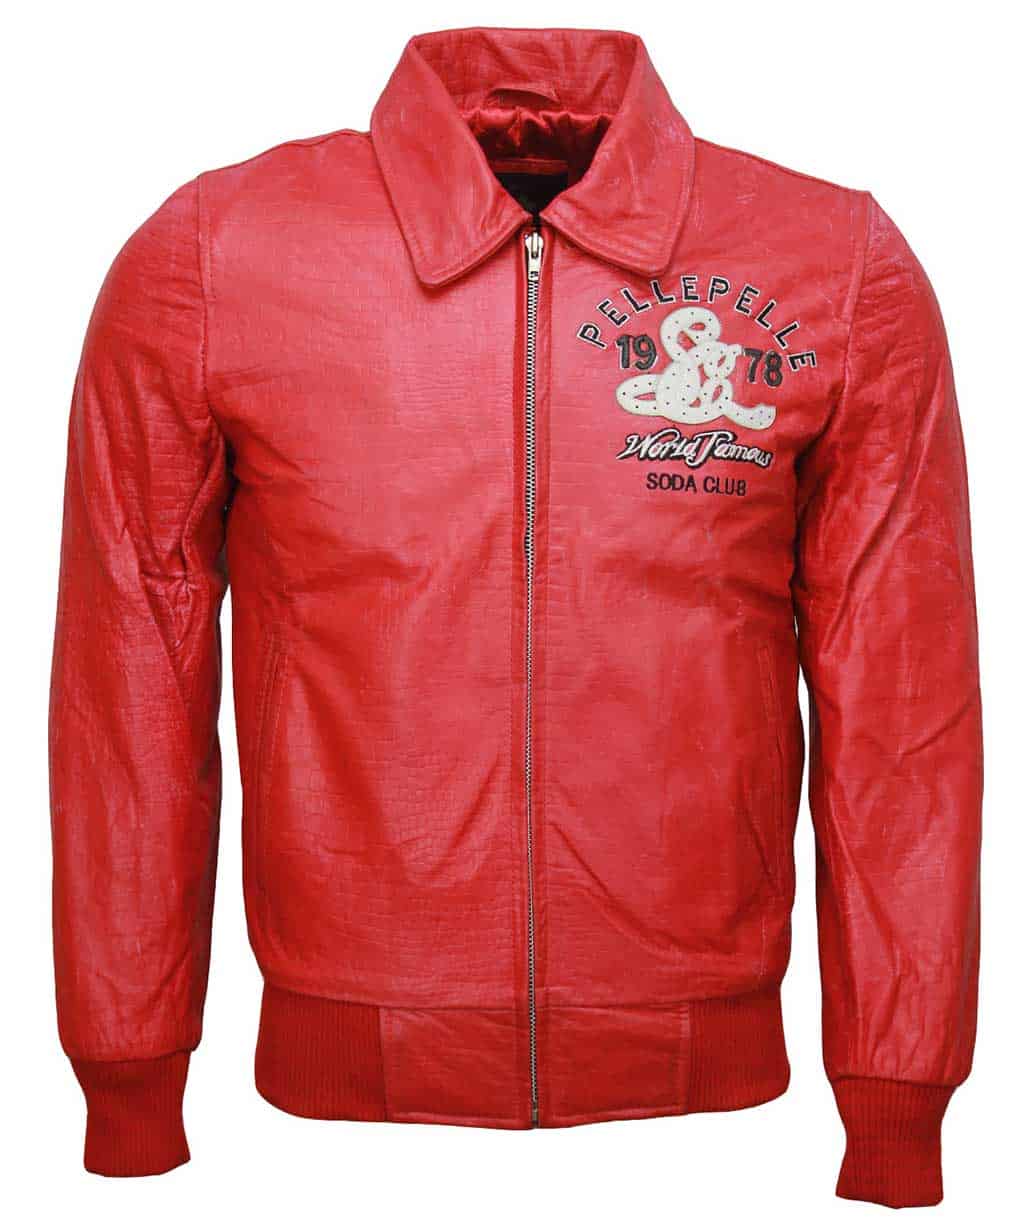 pelle-pelle-soda-club-red-leather-jacket